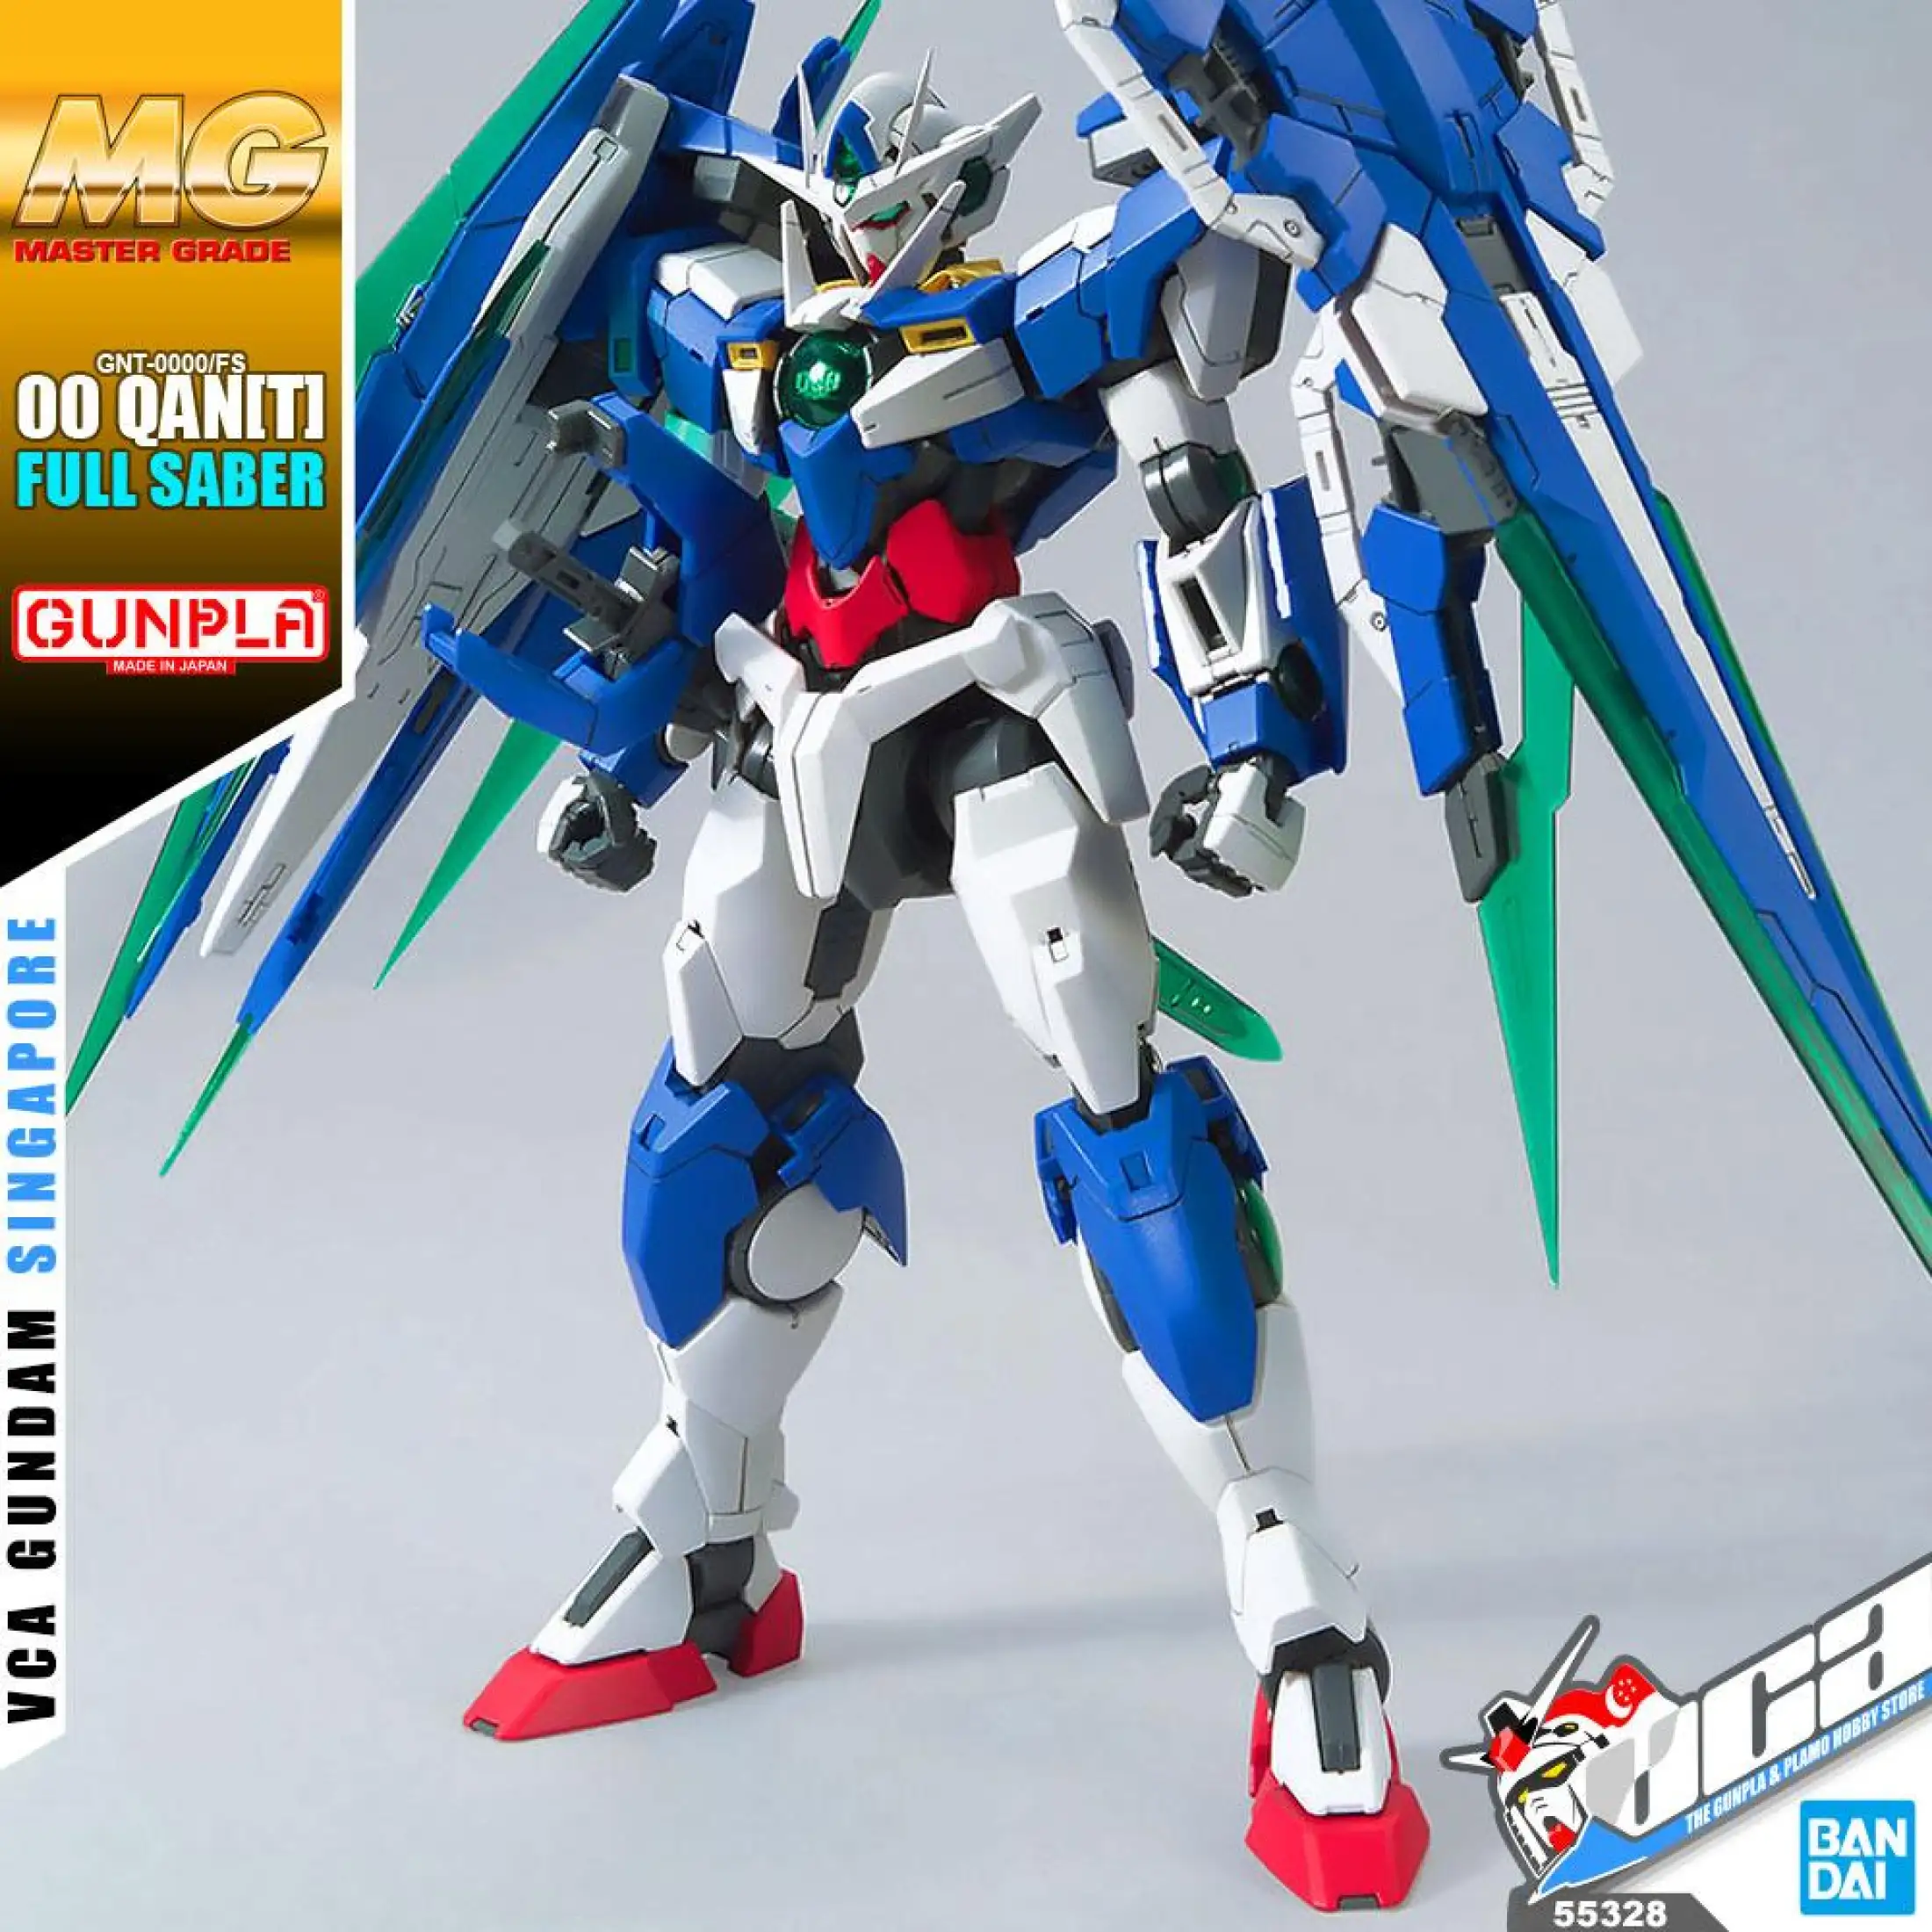 Bandai Gunpla Master Grade Mg 1 100 Gnt 0000 Fs 00 Qan T Qant Full Saber Plastic Model Kit Toy Vca Gundam Singapore Lazada Singapore